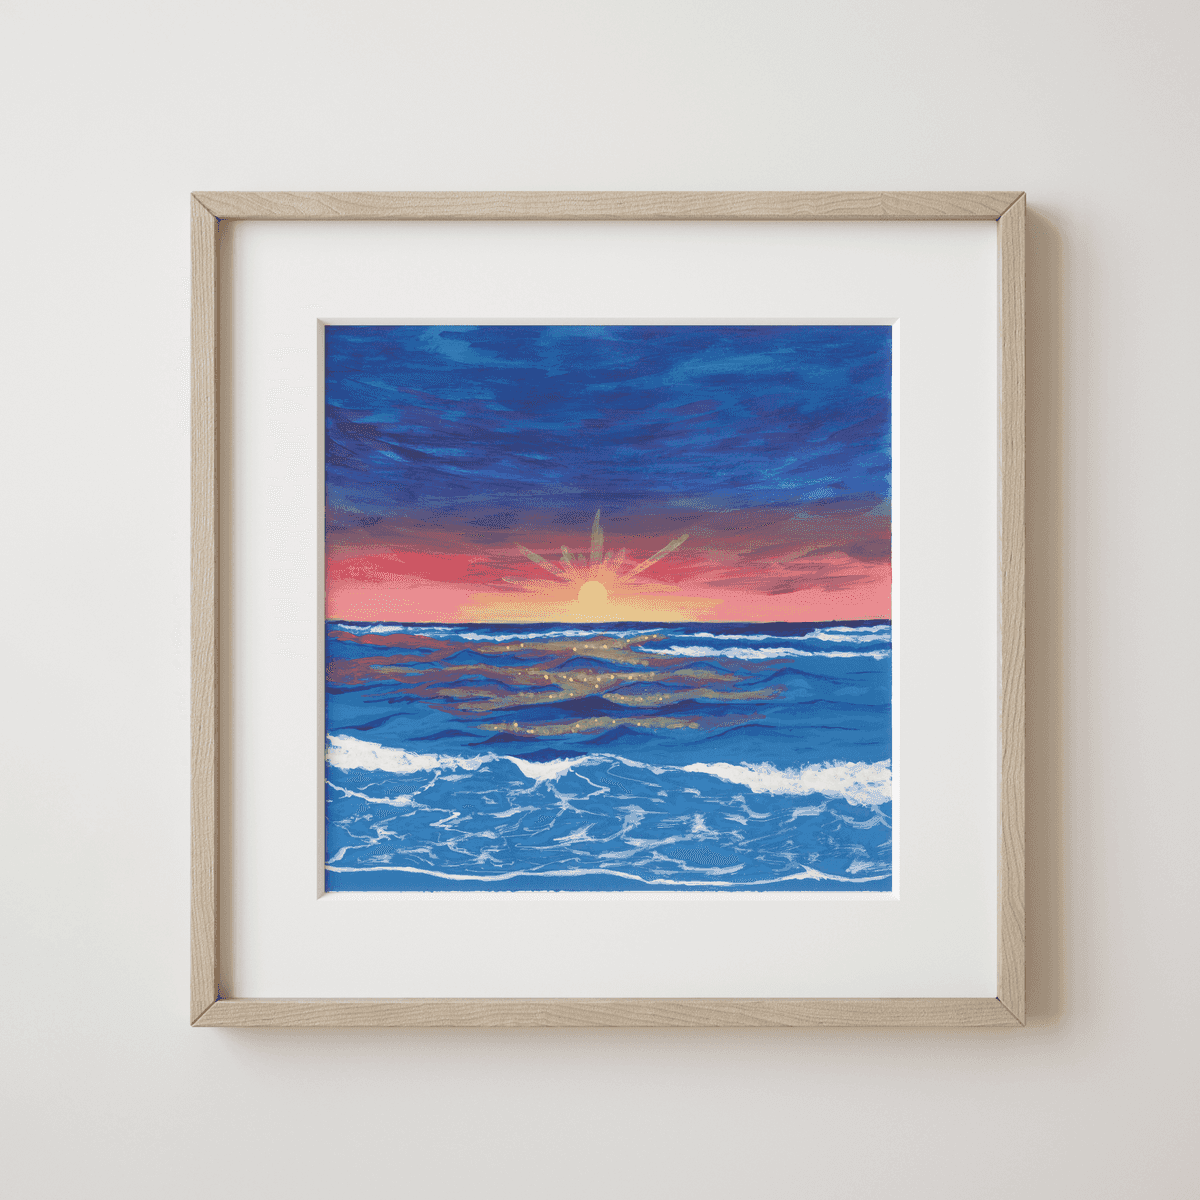 Hooker’s Sea Lions - Sunset Majesty over the Ocean's Horizon Fine Art Print - earth.fm